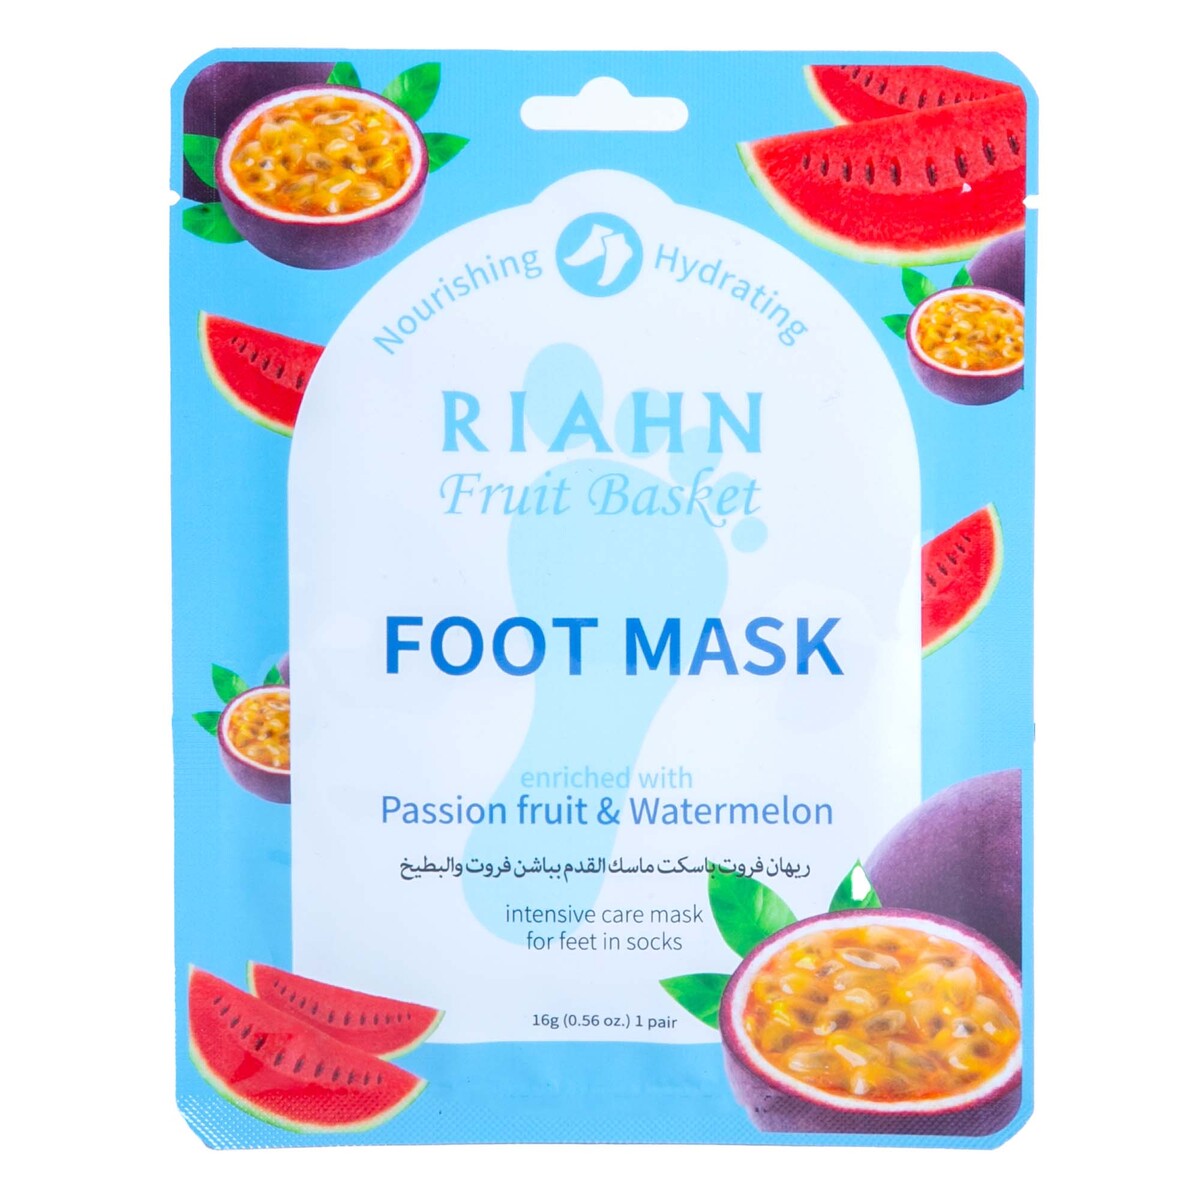 Riahn Fruit Basket Passion fruit & Watermelon Foot Mask, 16 g